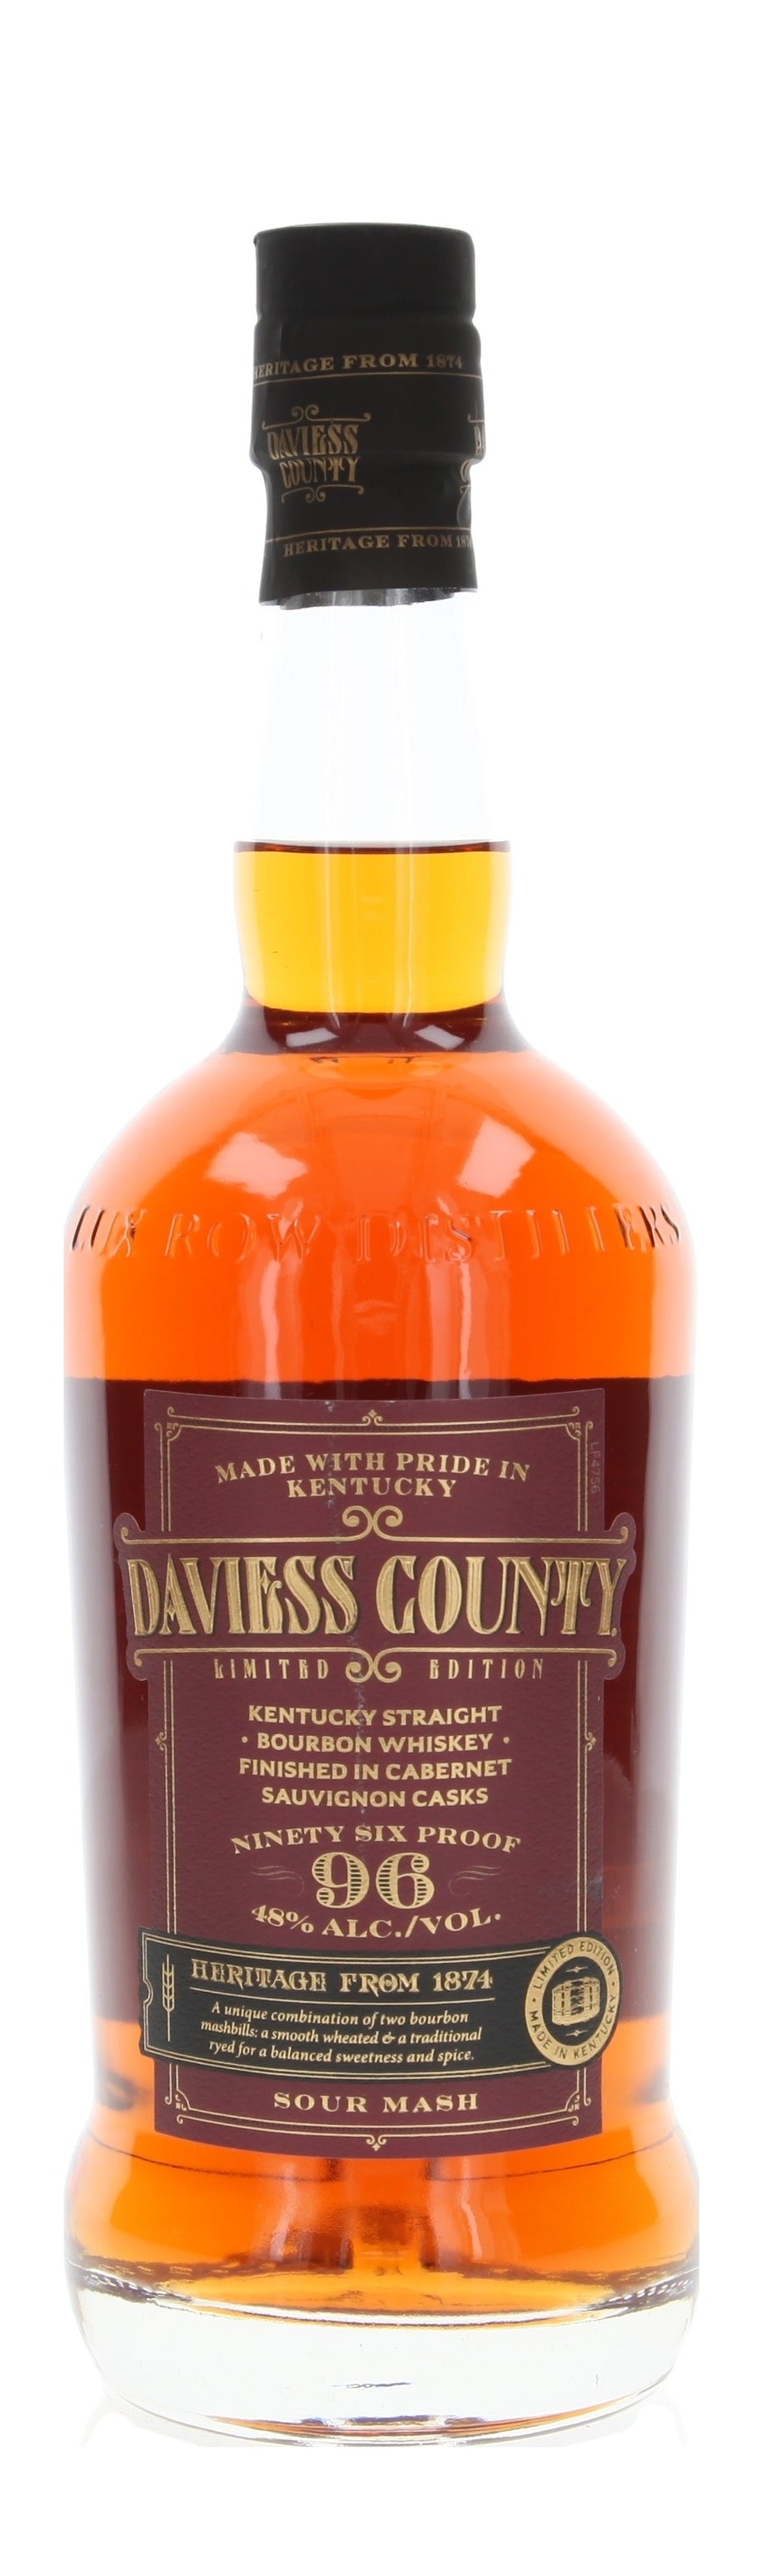 Daviess County Cabernet Cask Finished Kentucky Straight Bourbon Whiskey